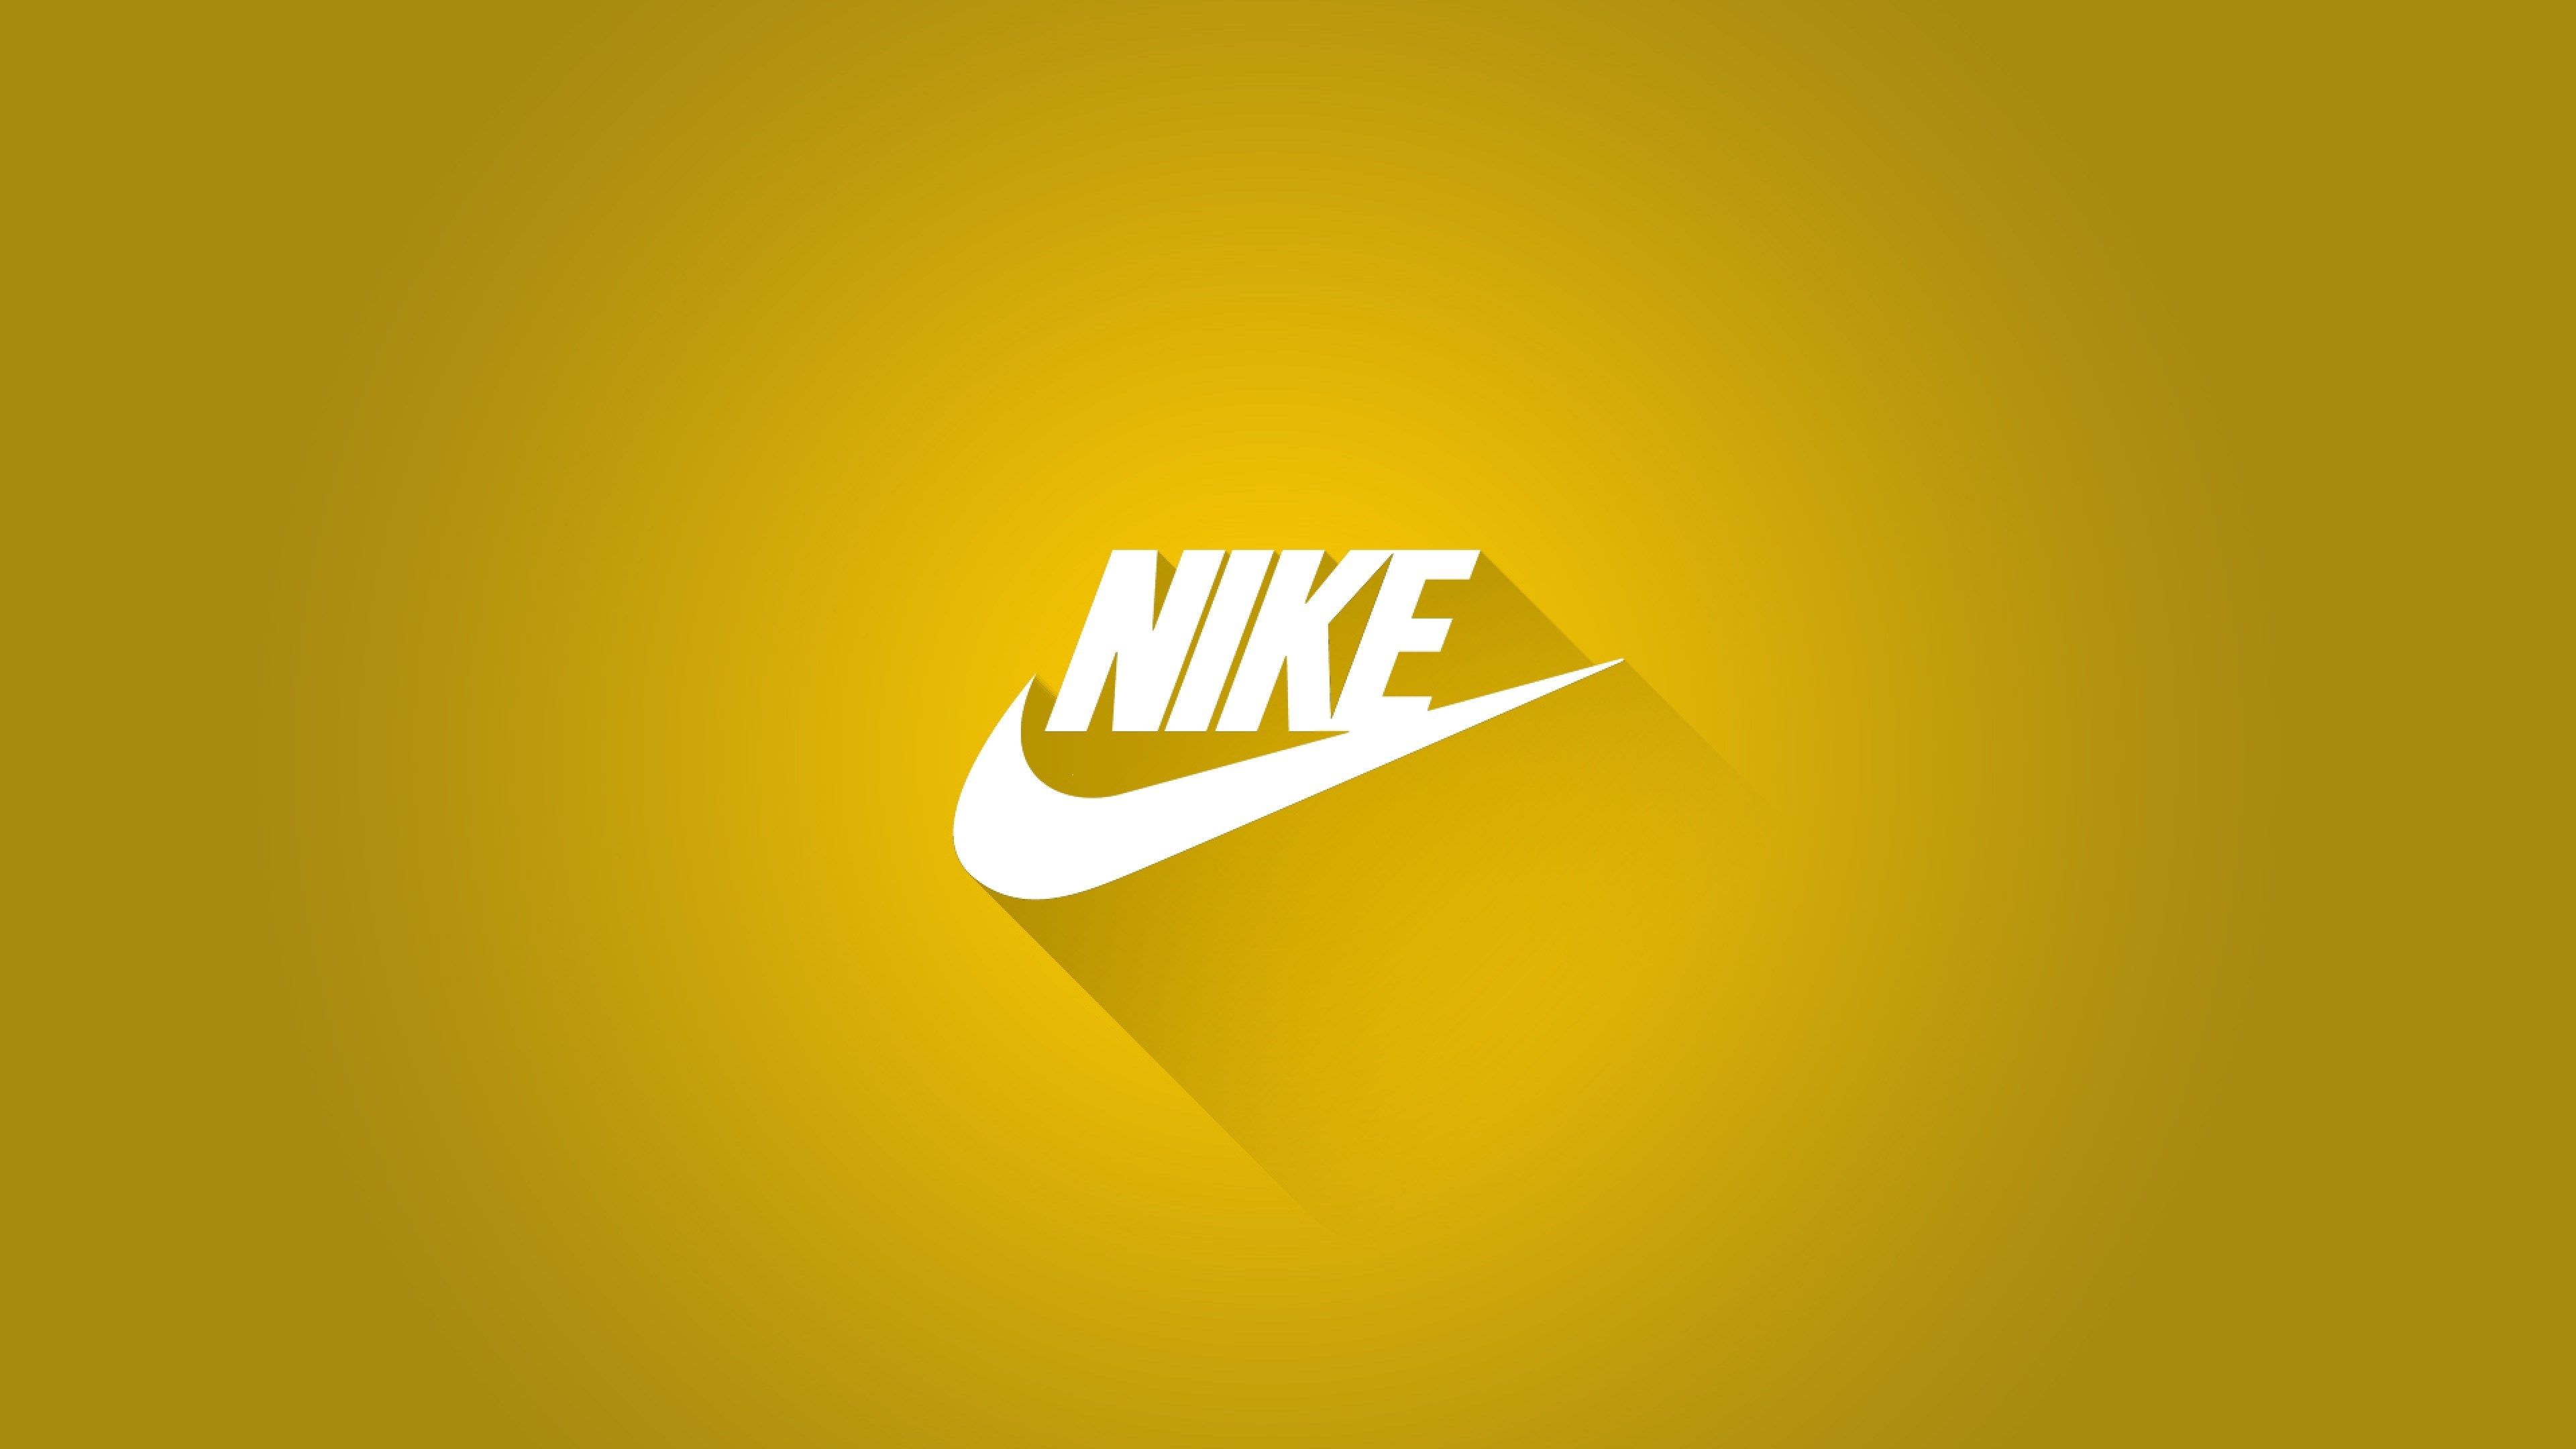 Nike Summer 4K wallpaper by Chris0711  Download on ZEDGE  2635